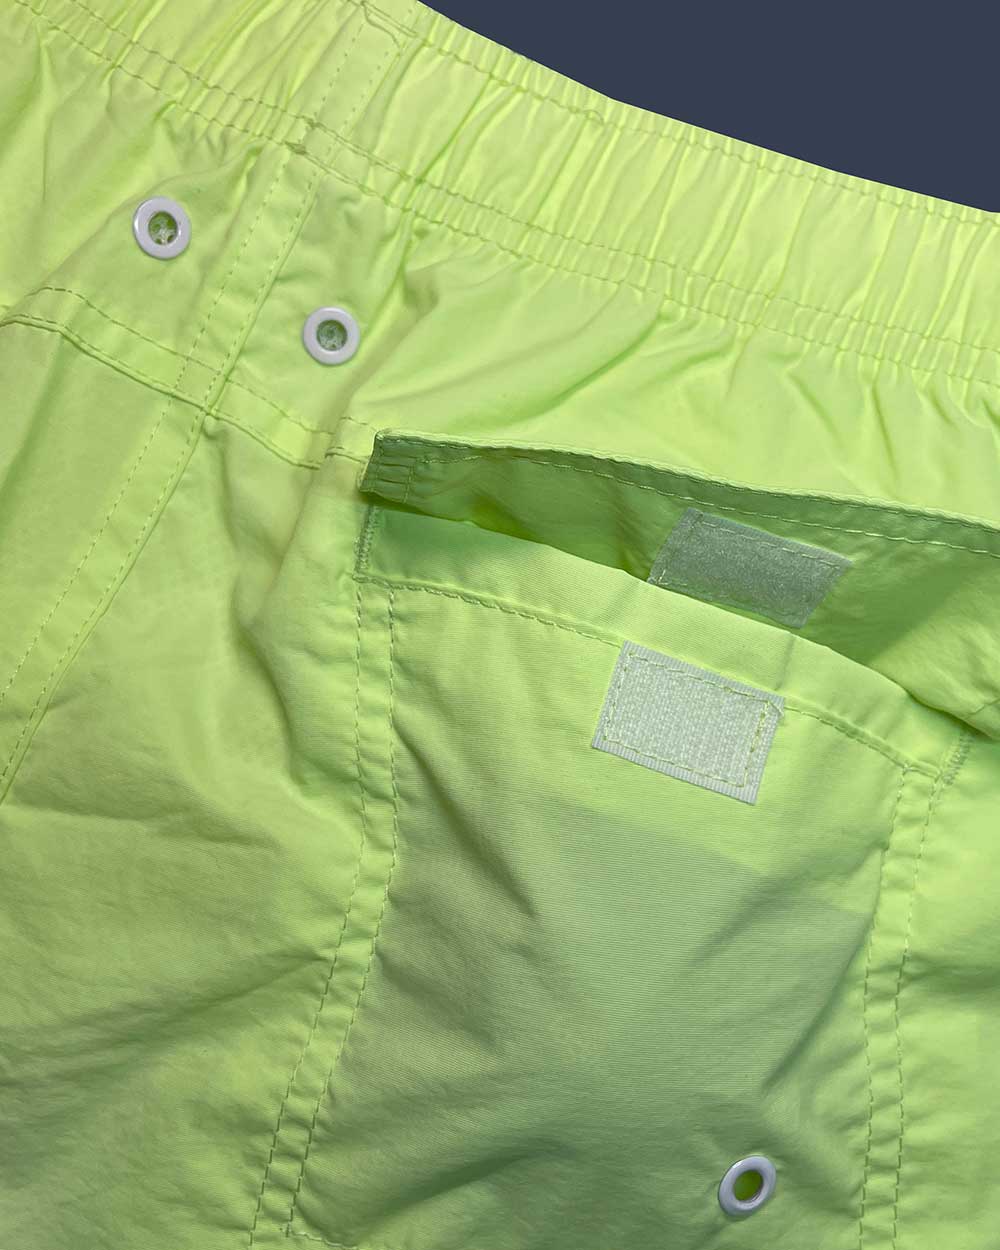 Swim Shorts-Neon Green [4464]